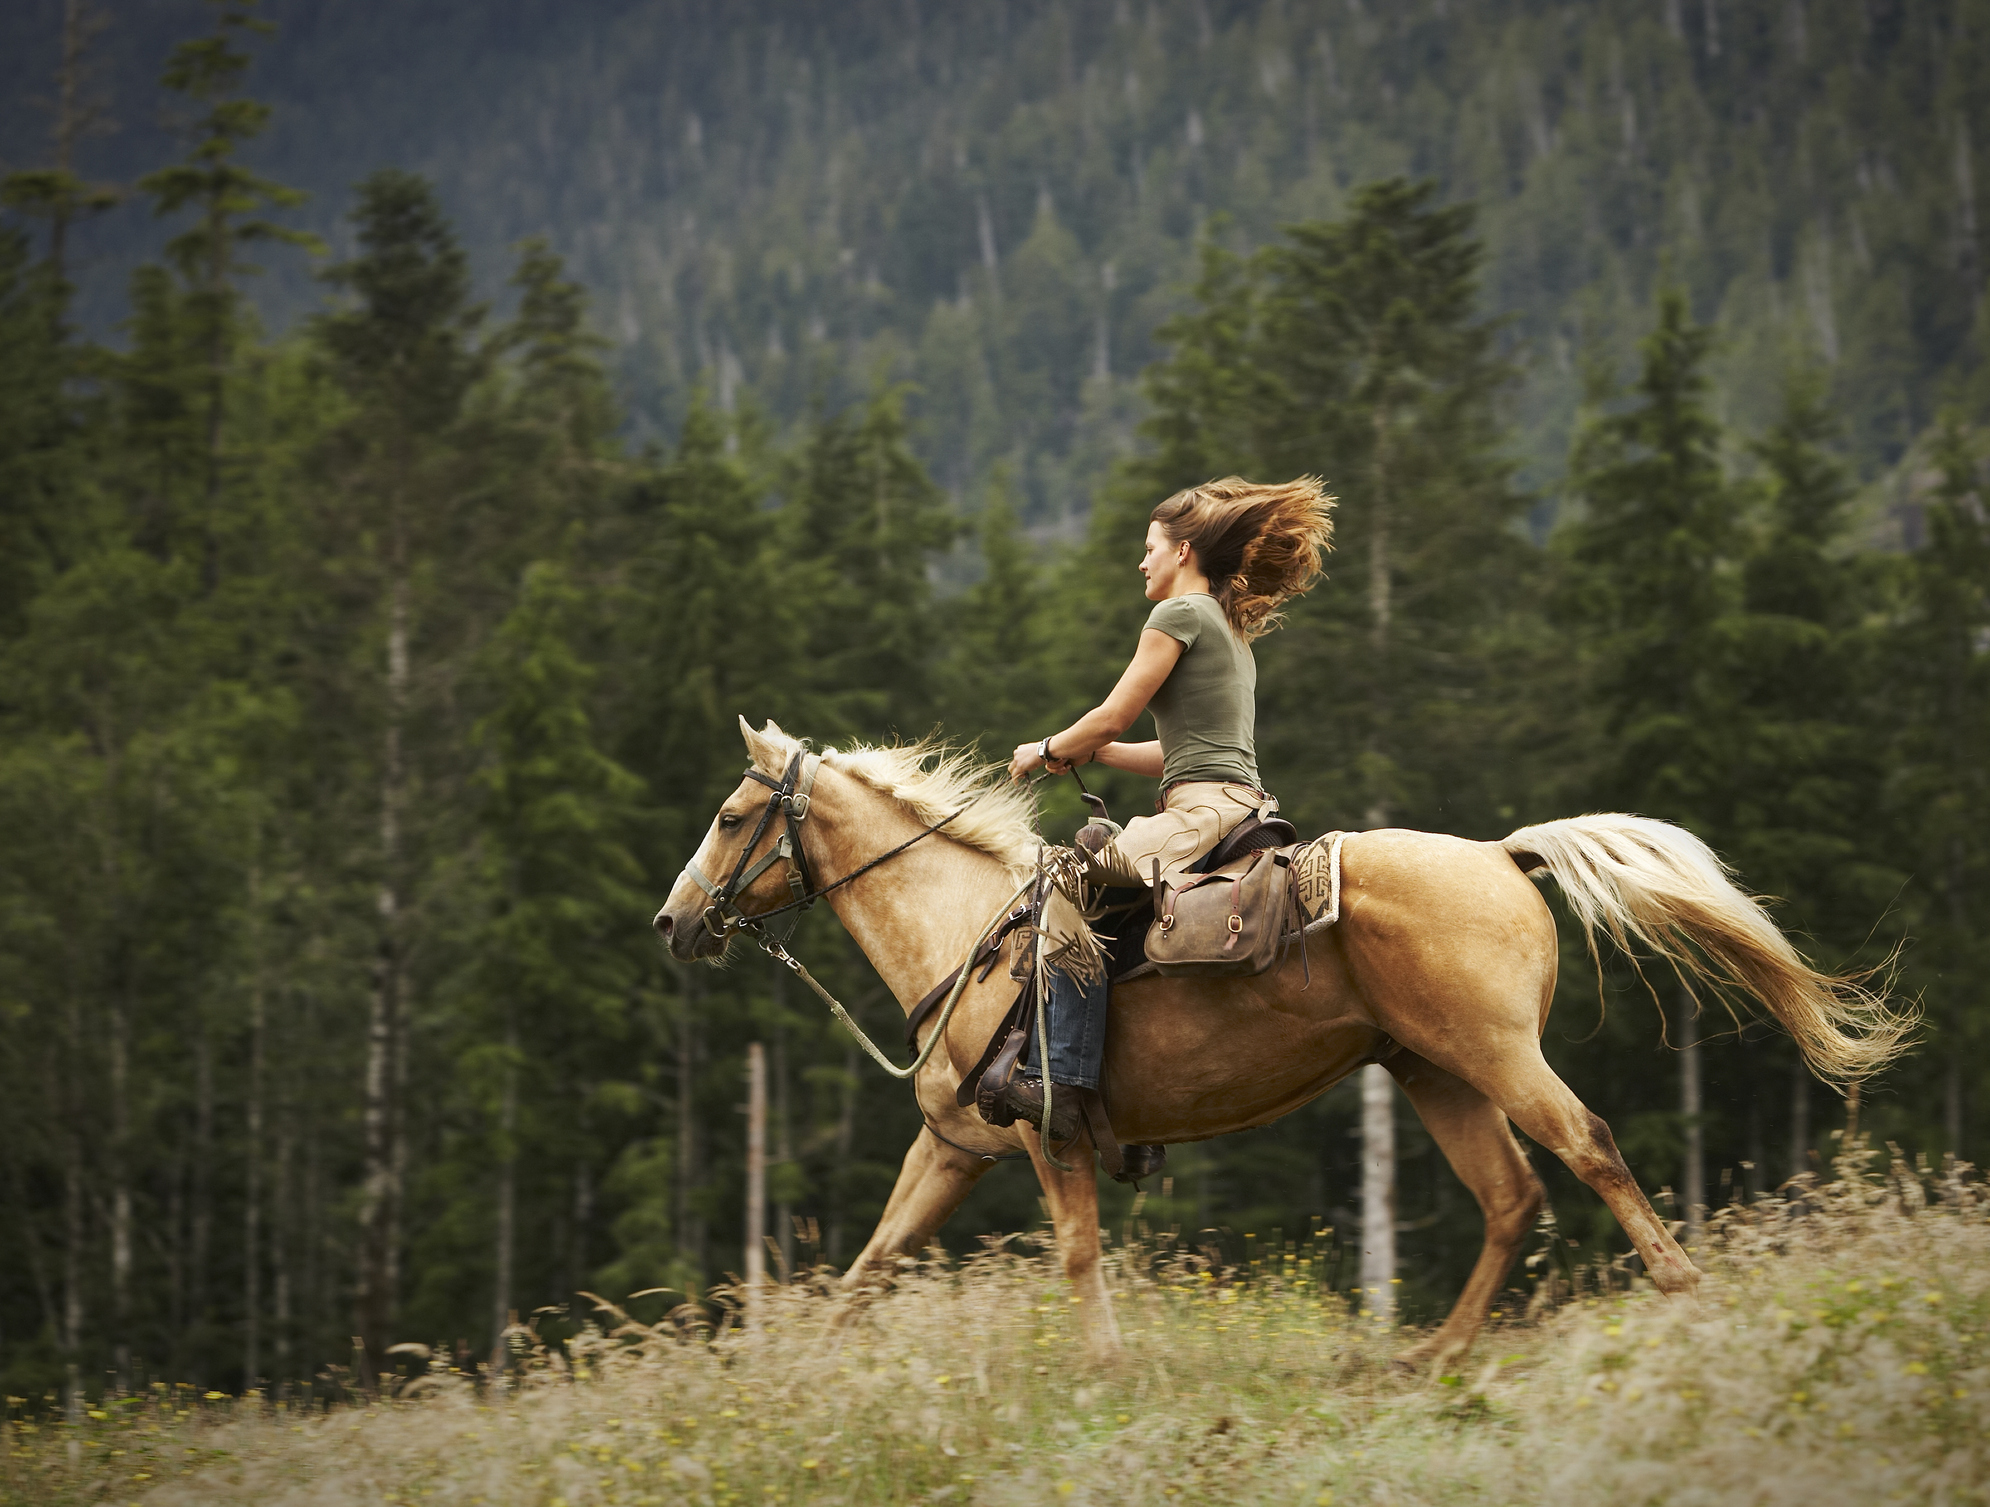 Woman riding horse through field